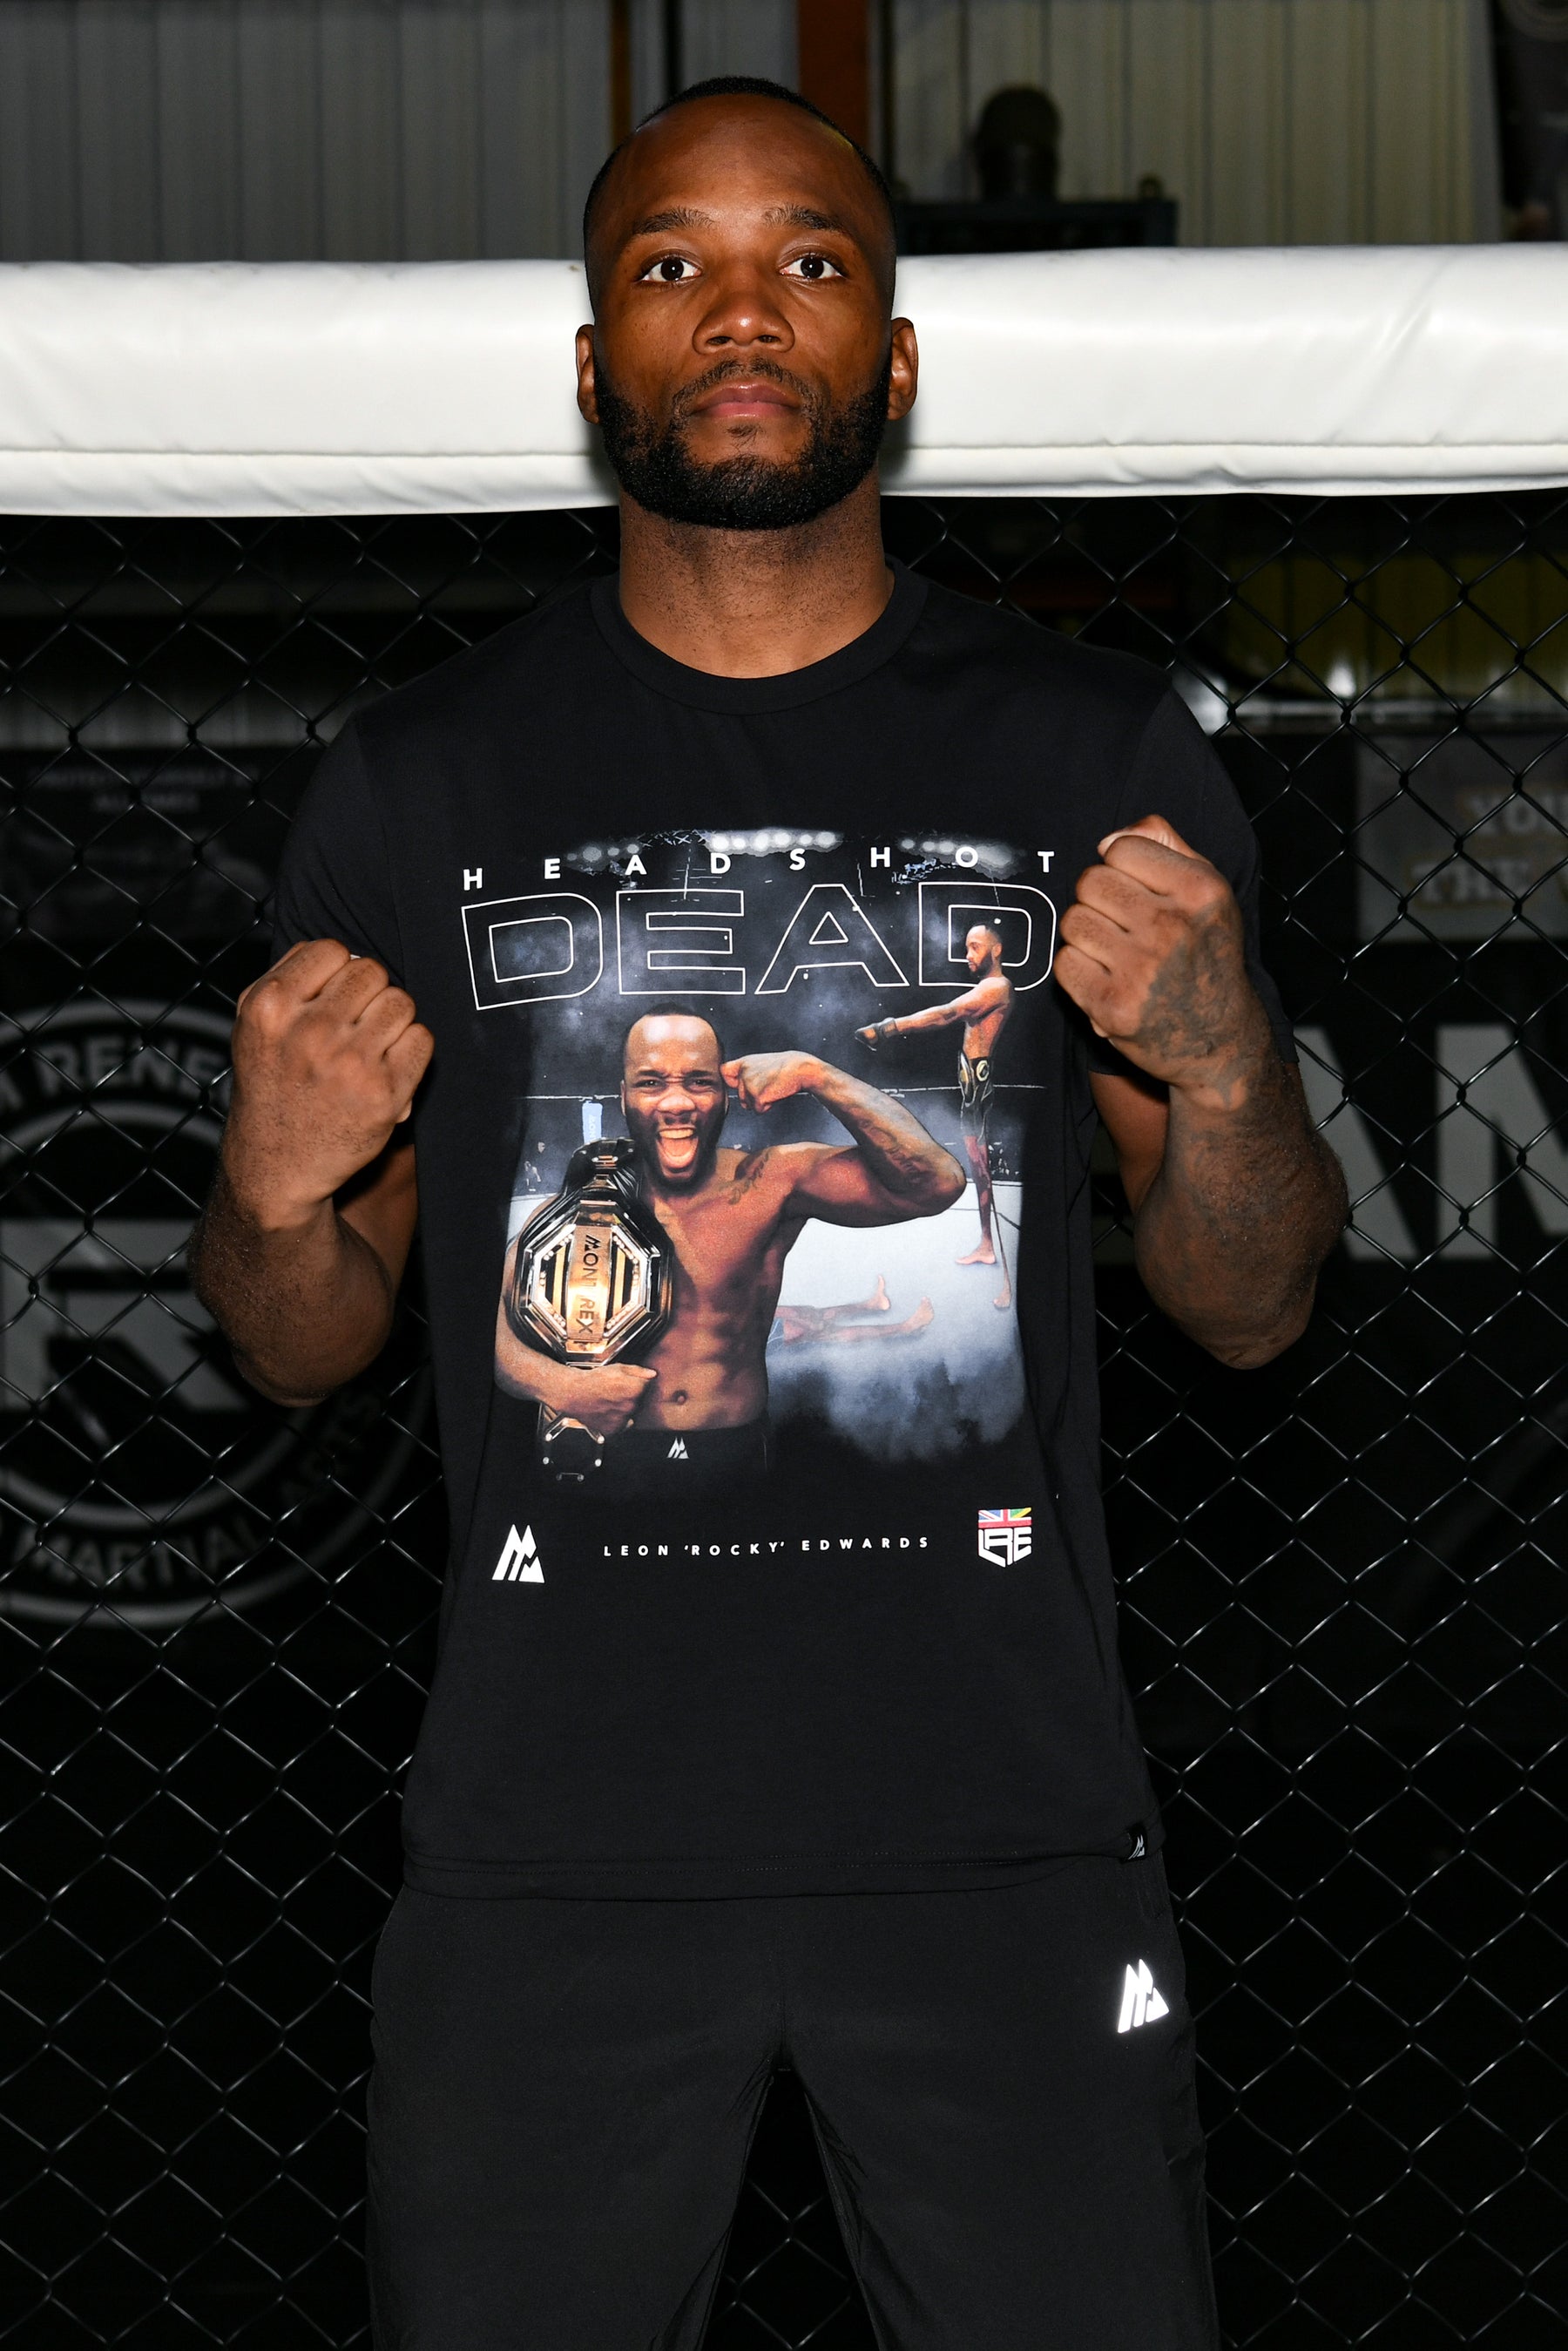 Leon Edwards Head Shot T-Shirt - Black